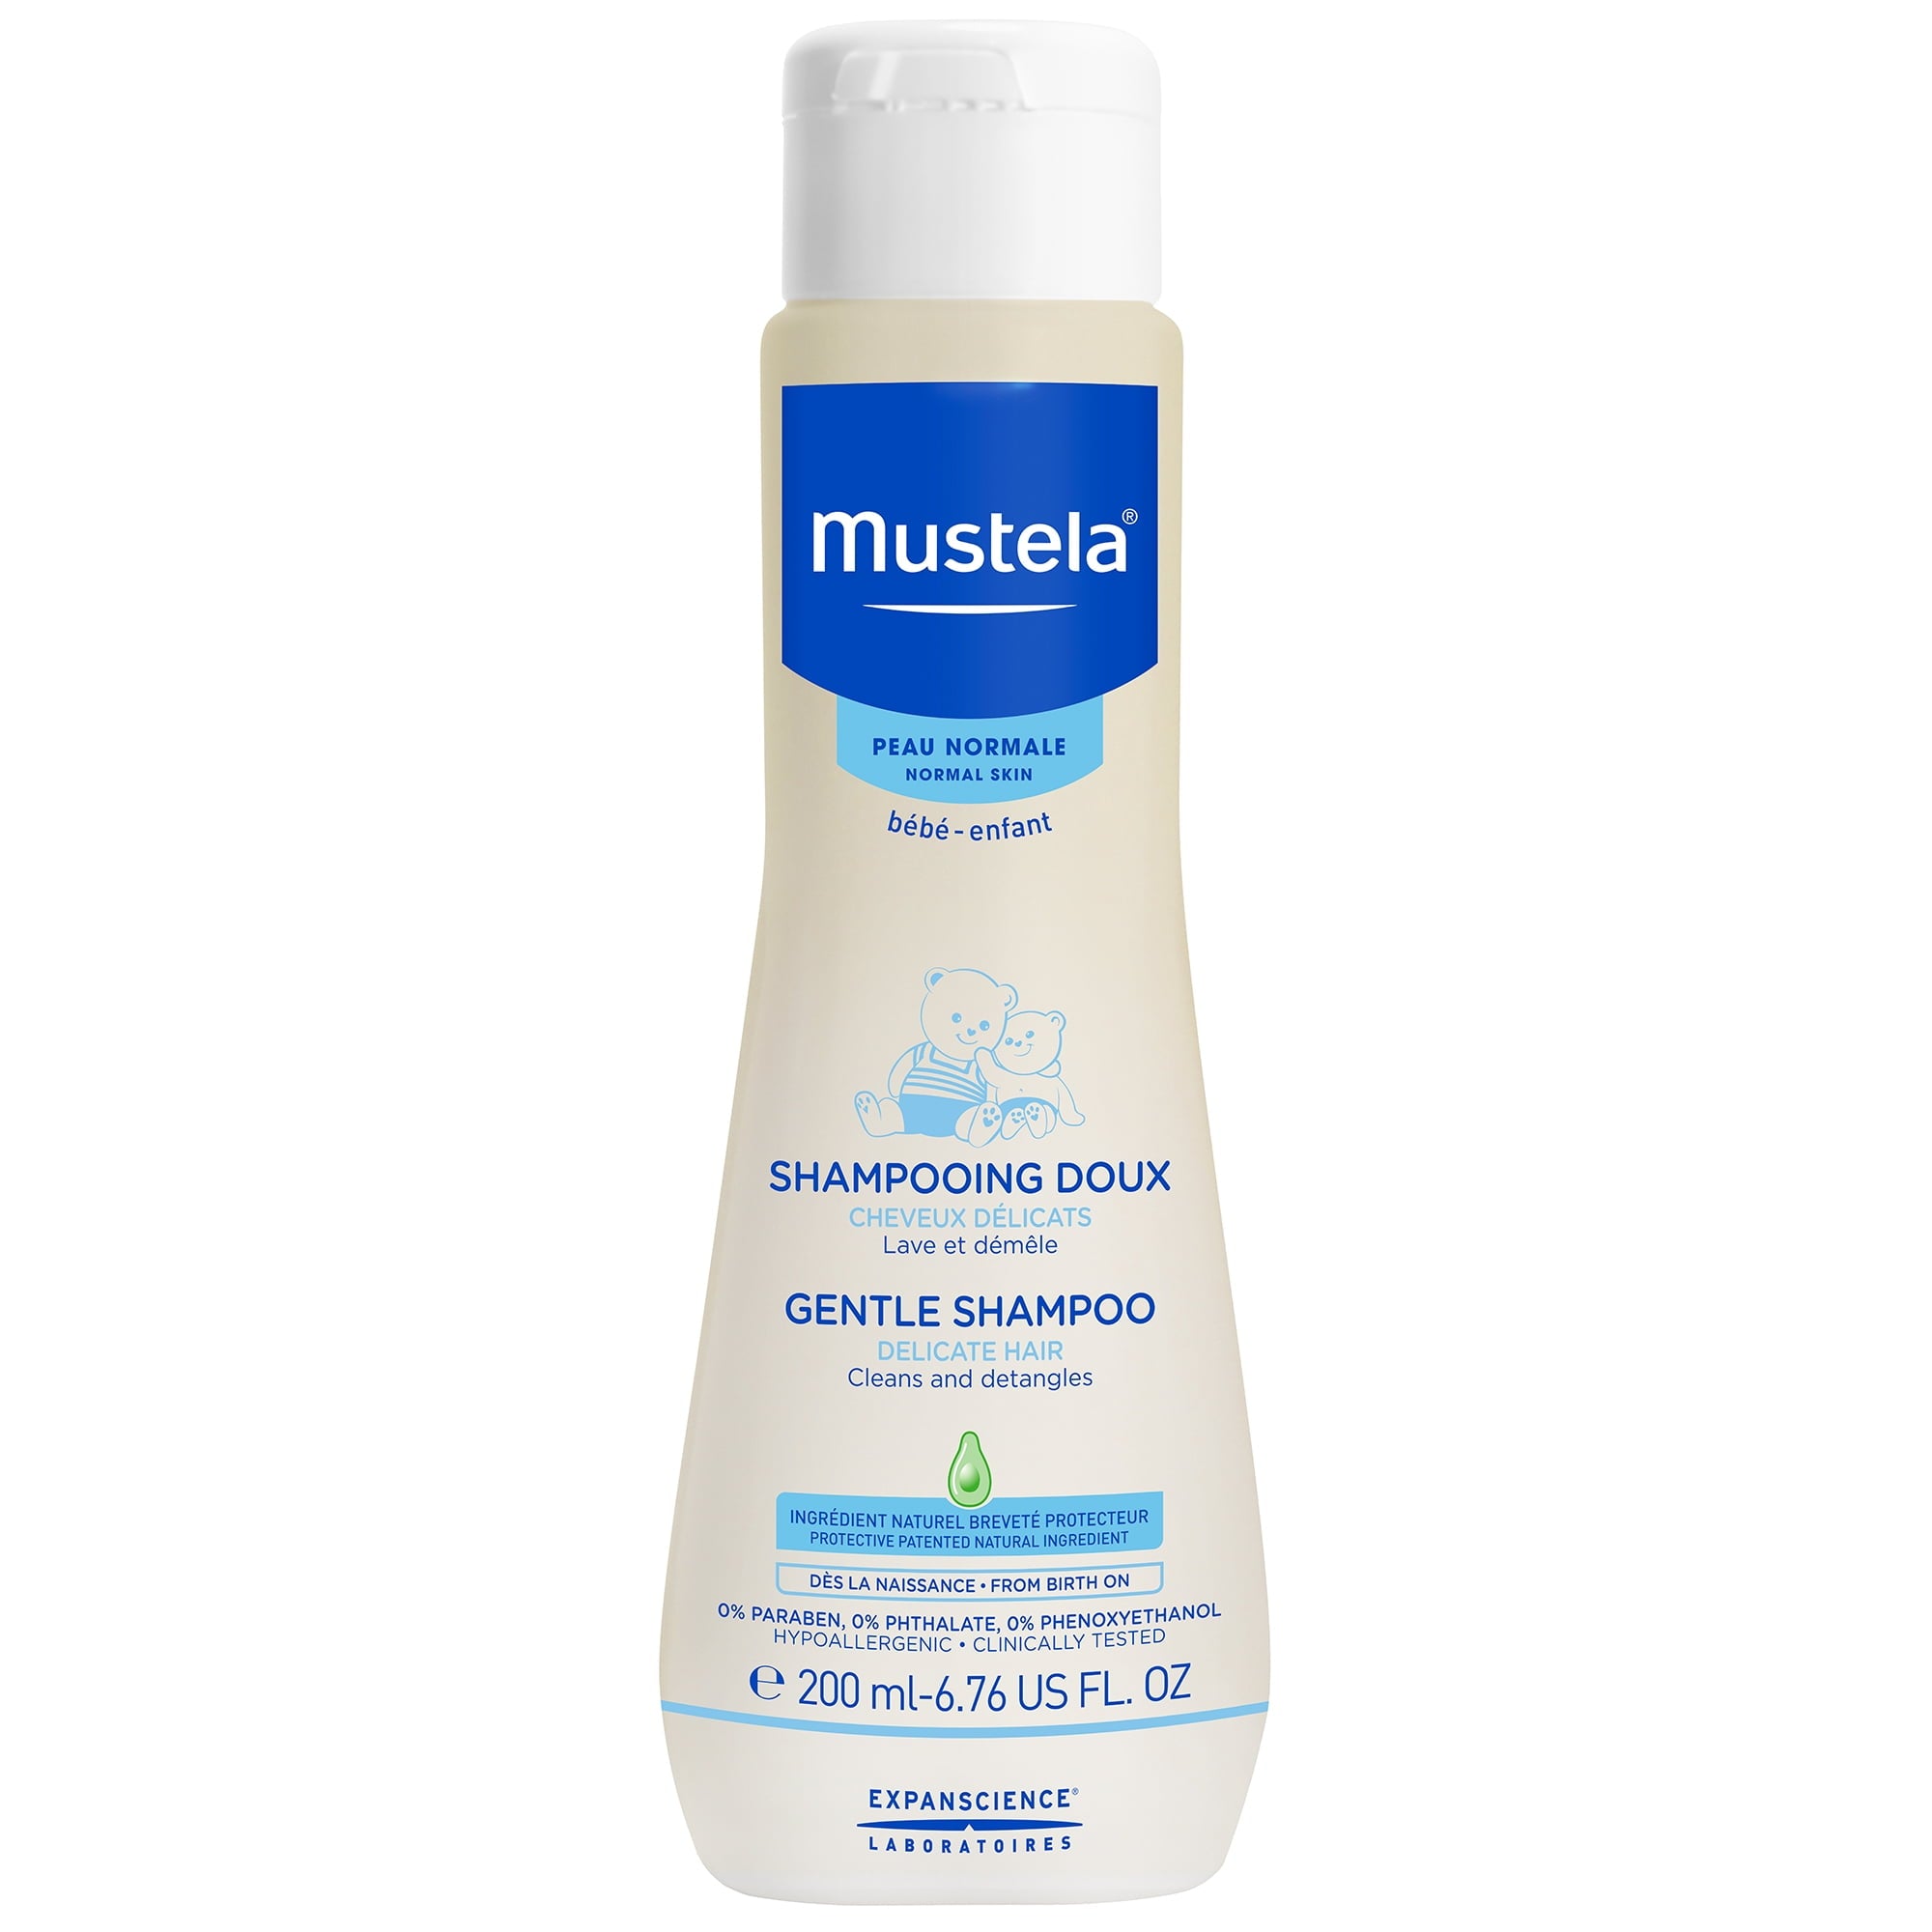 Mustela Gentle Shampoo, Normal Skin, (200 ml)